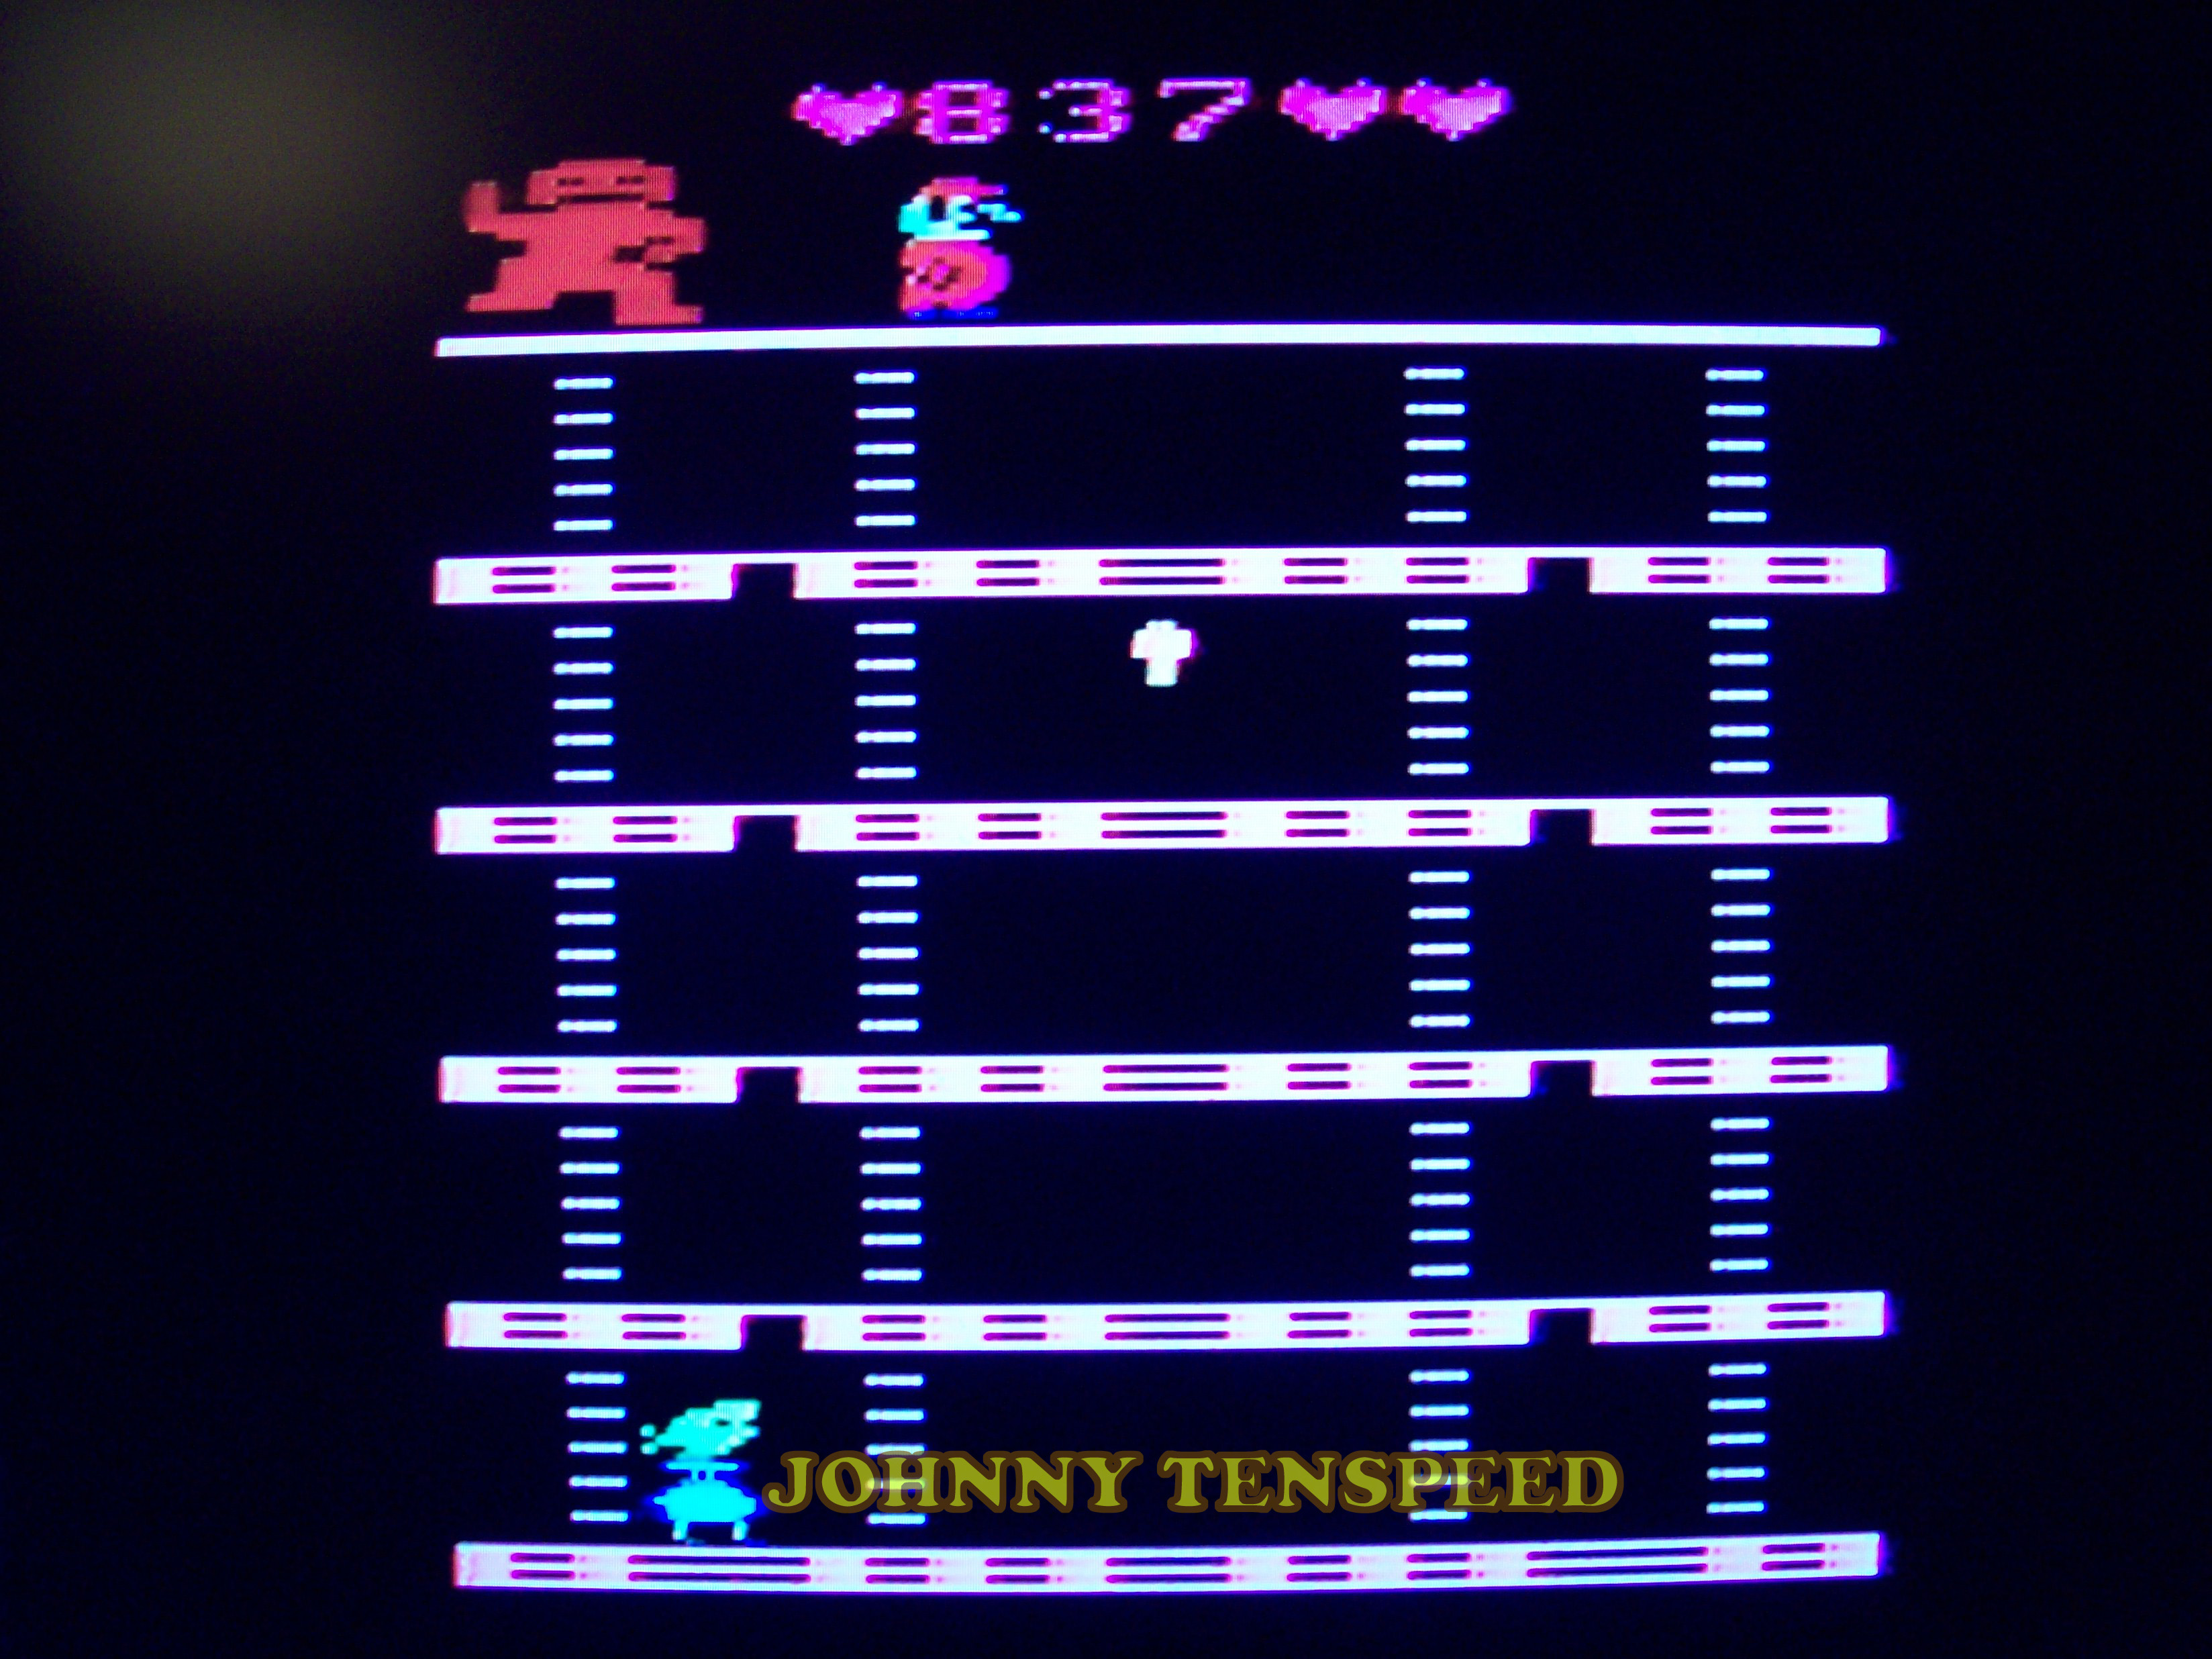 JohnnyTenspeed: Donkey Kong: Pauline Edition (Atari 2600 Novice/B) 83,700 points on 2014-12-24 23:30:25